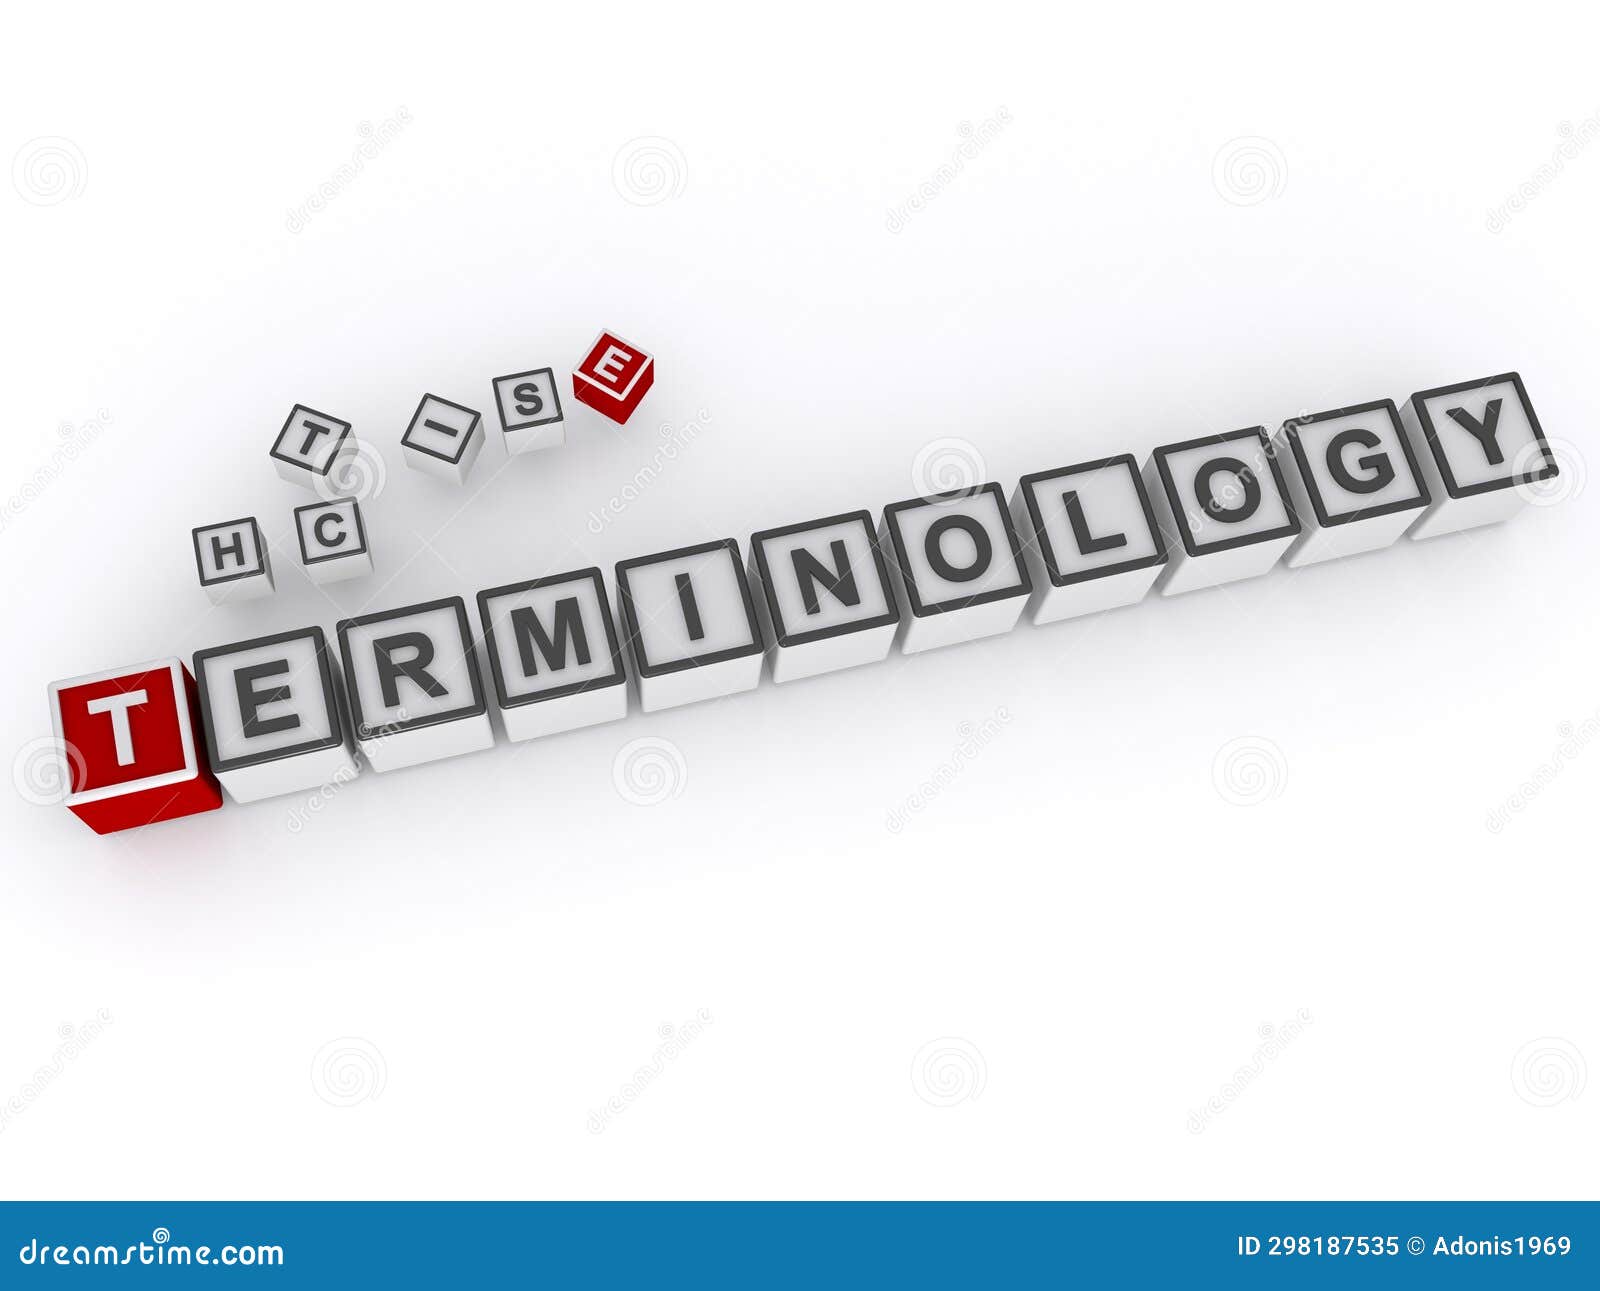 terminology word block on white